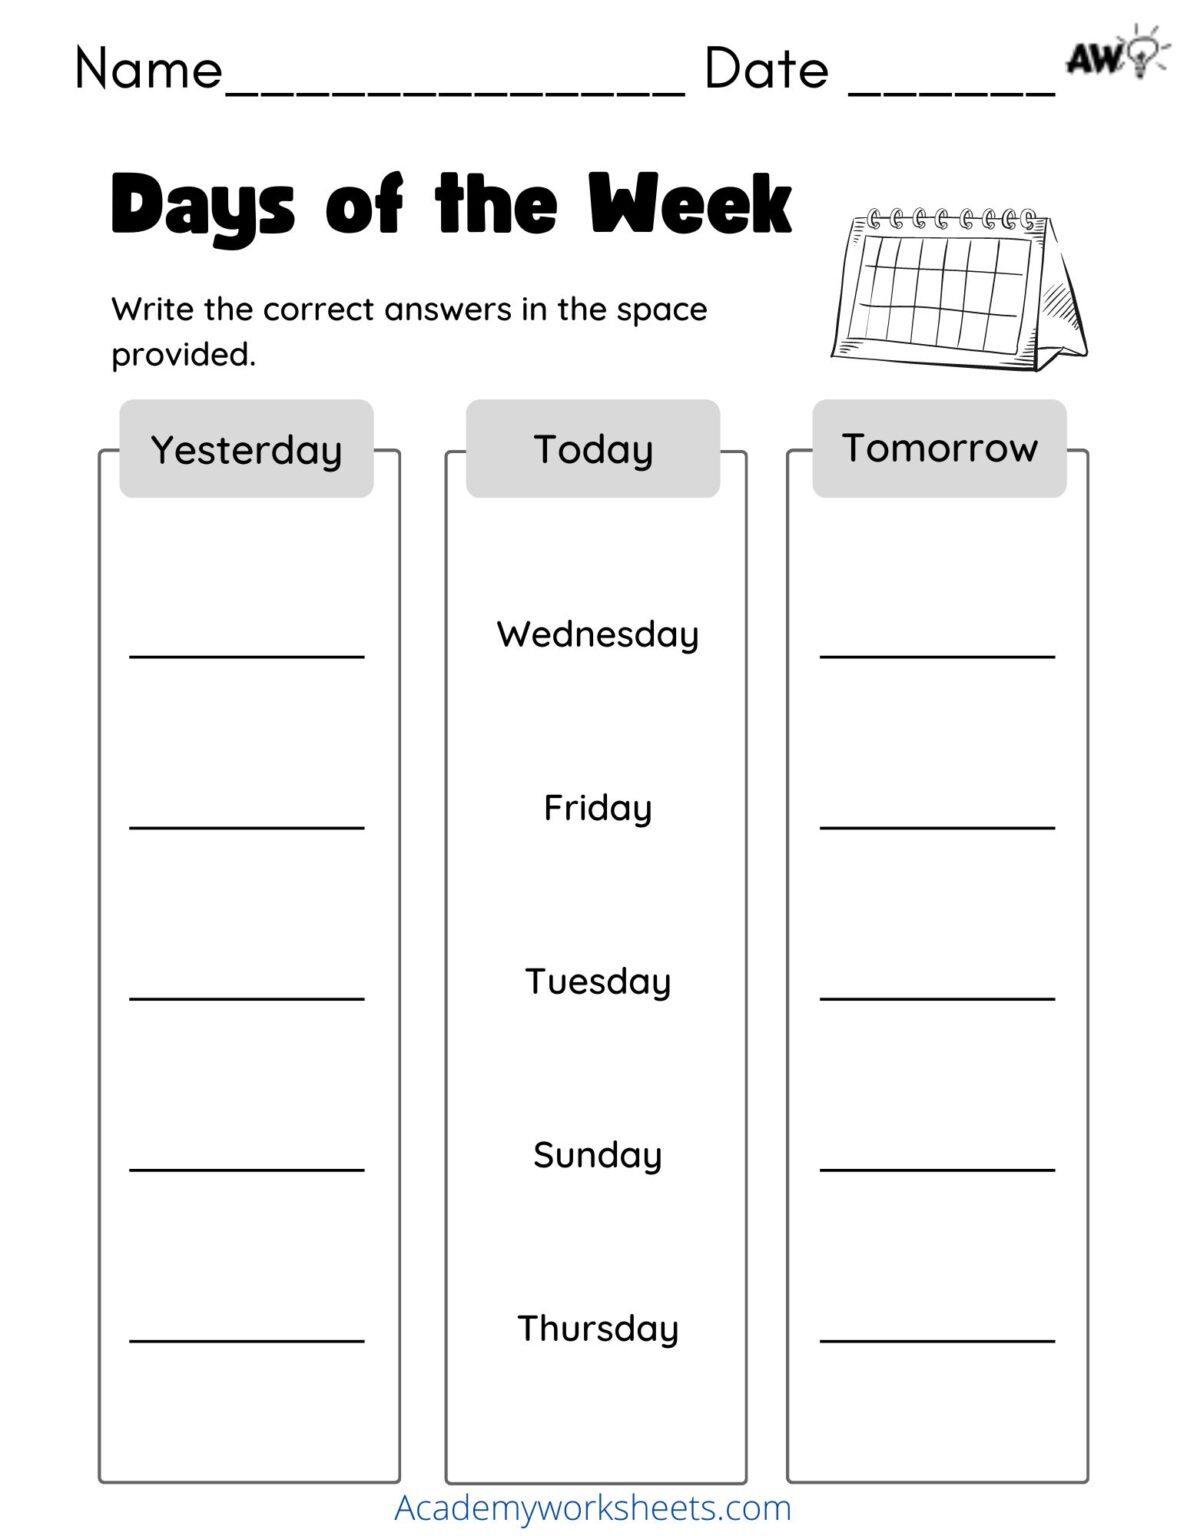 days-of-the-week-worksheets-pdf-academy-worksheets